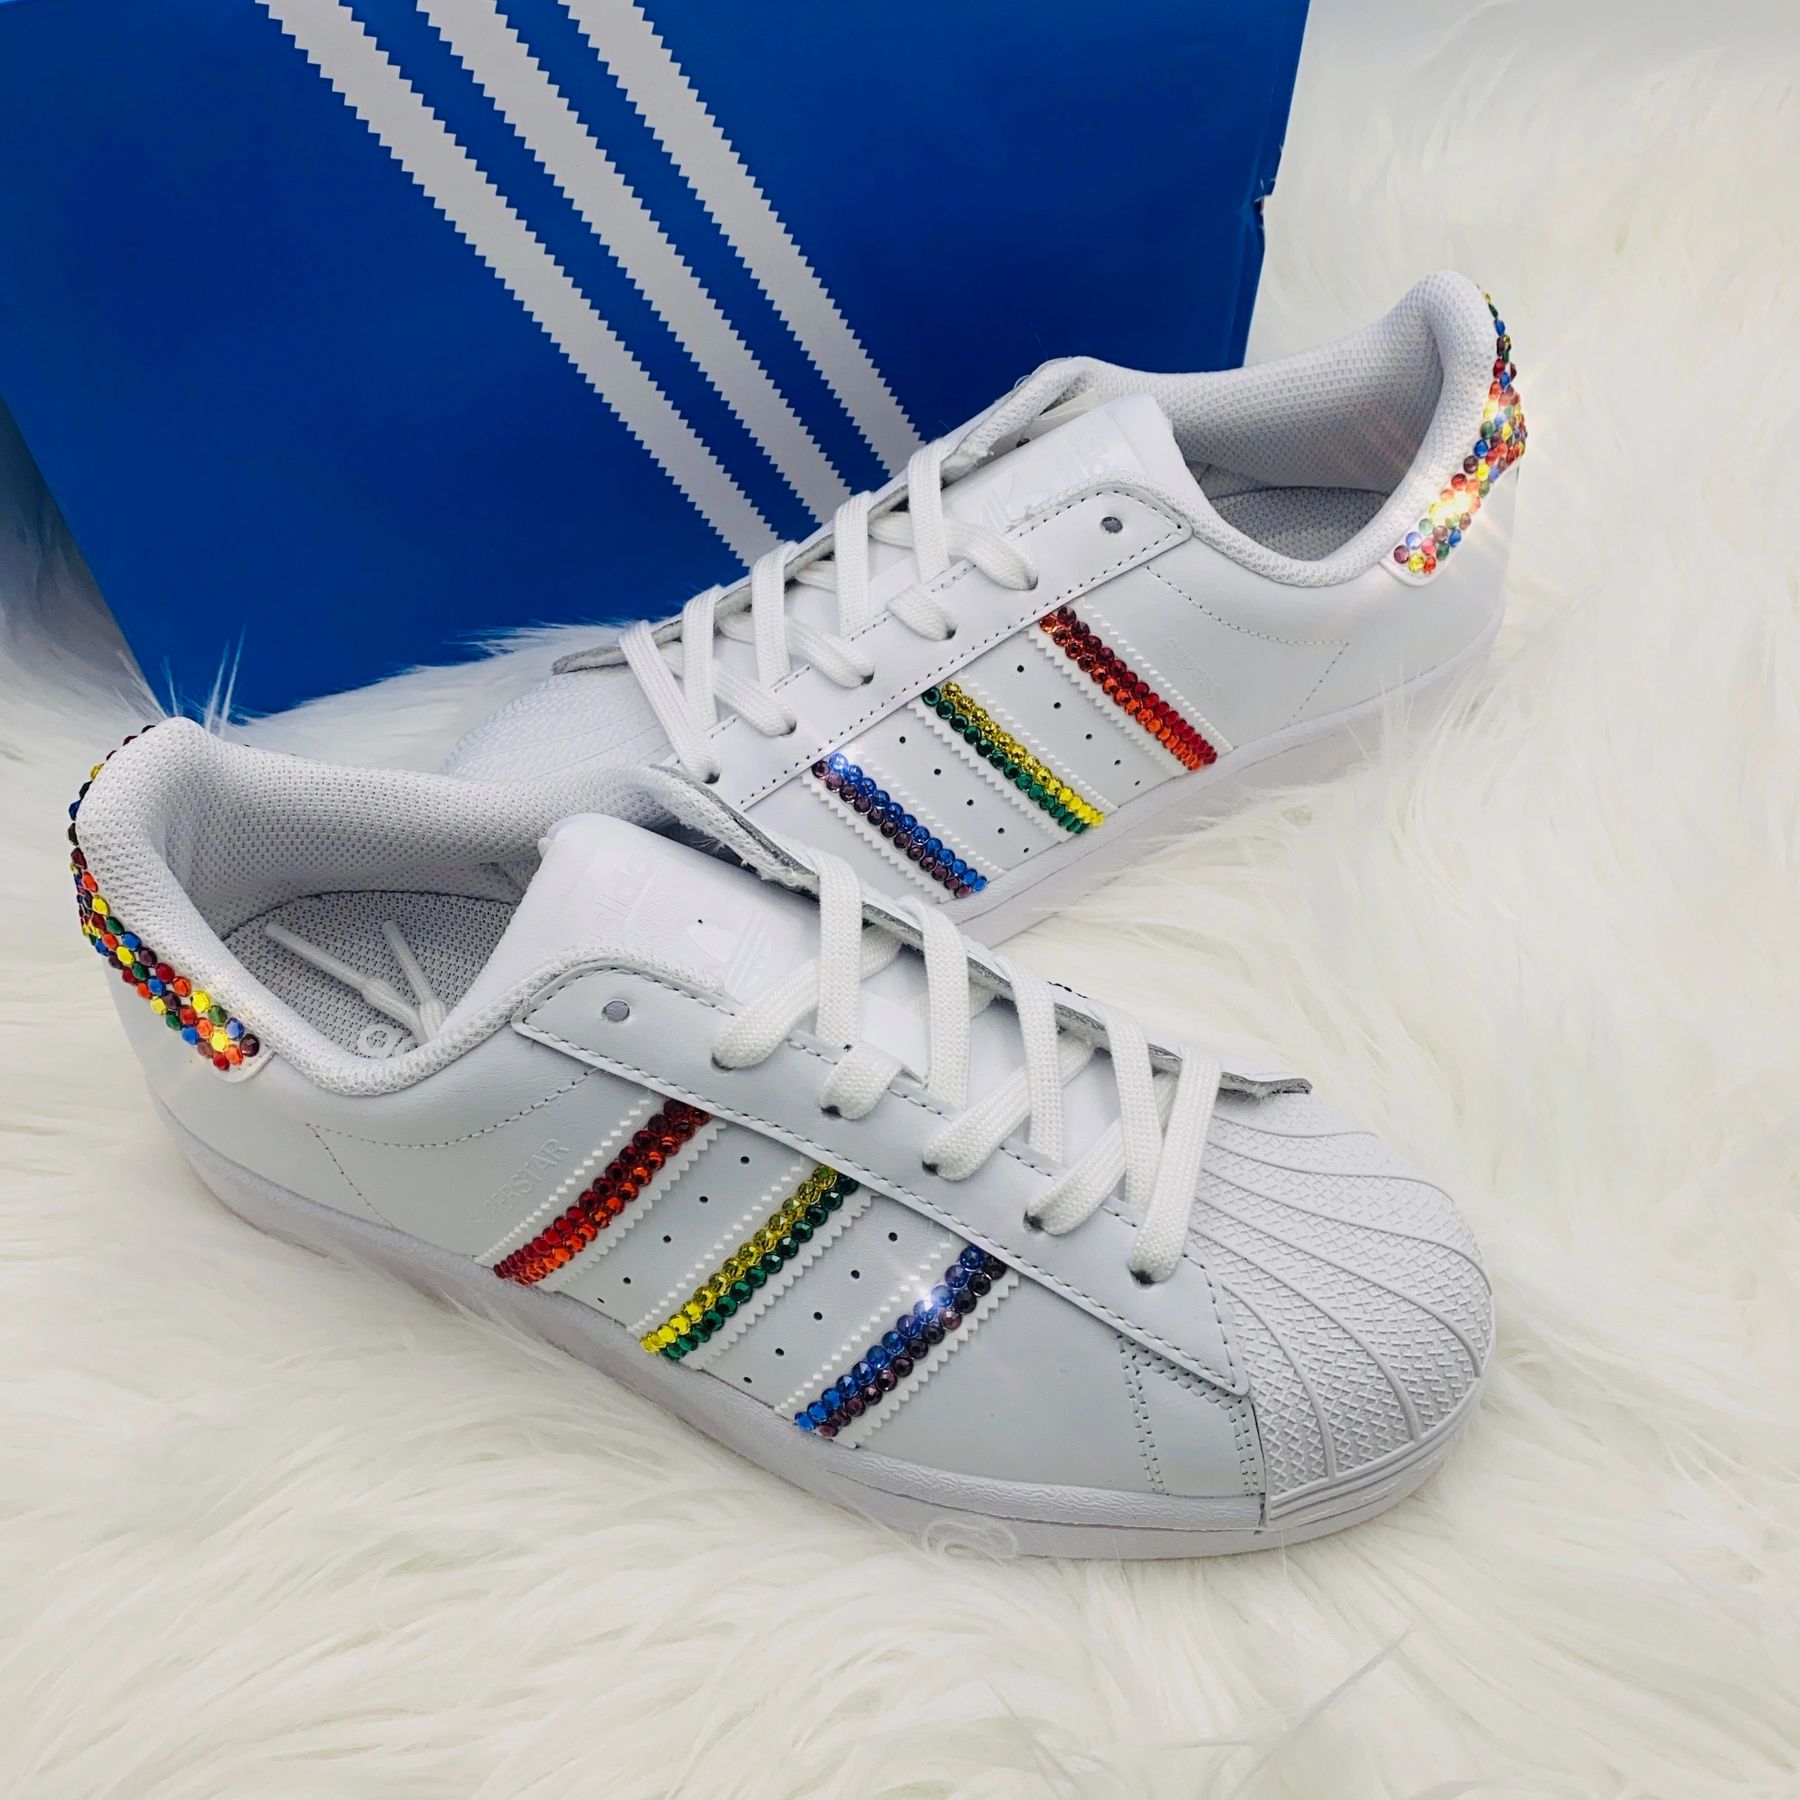 Swarovski Bling Shoes - All White Rainbow Stripes